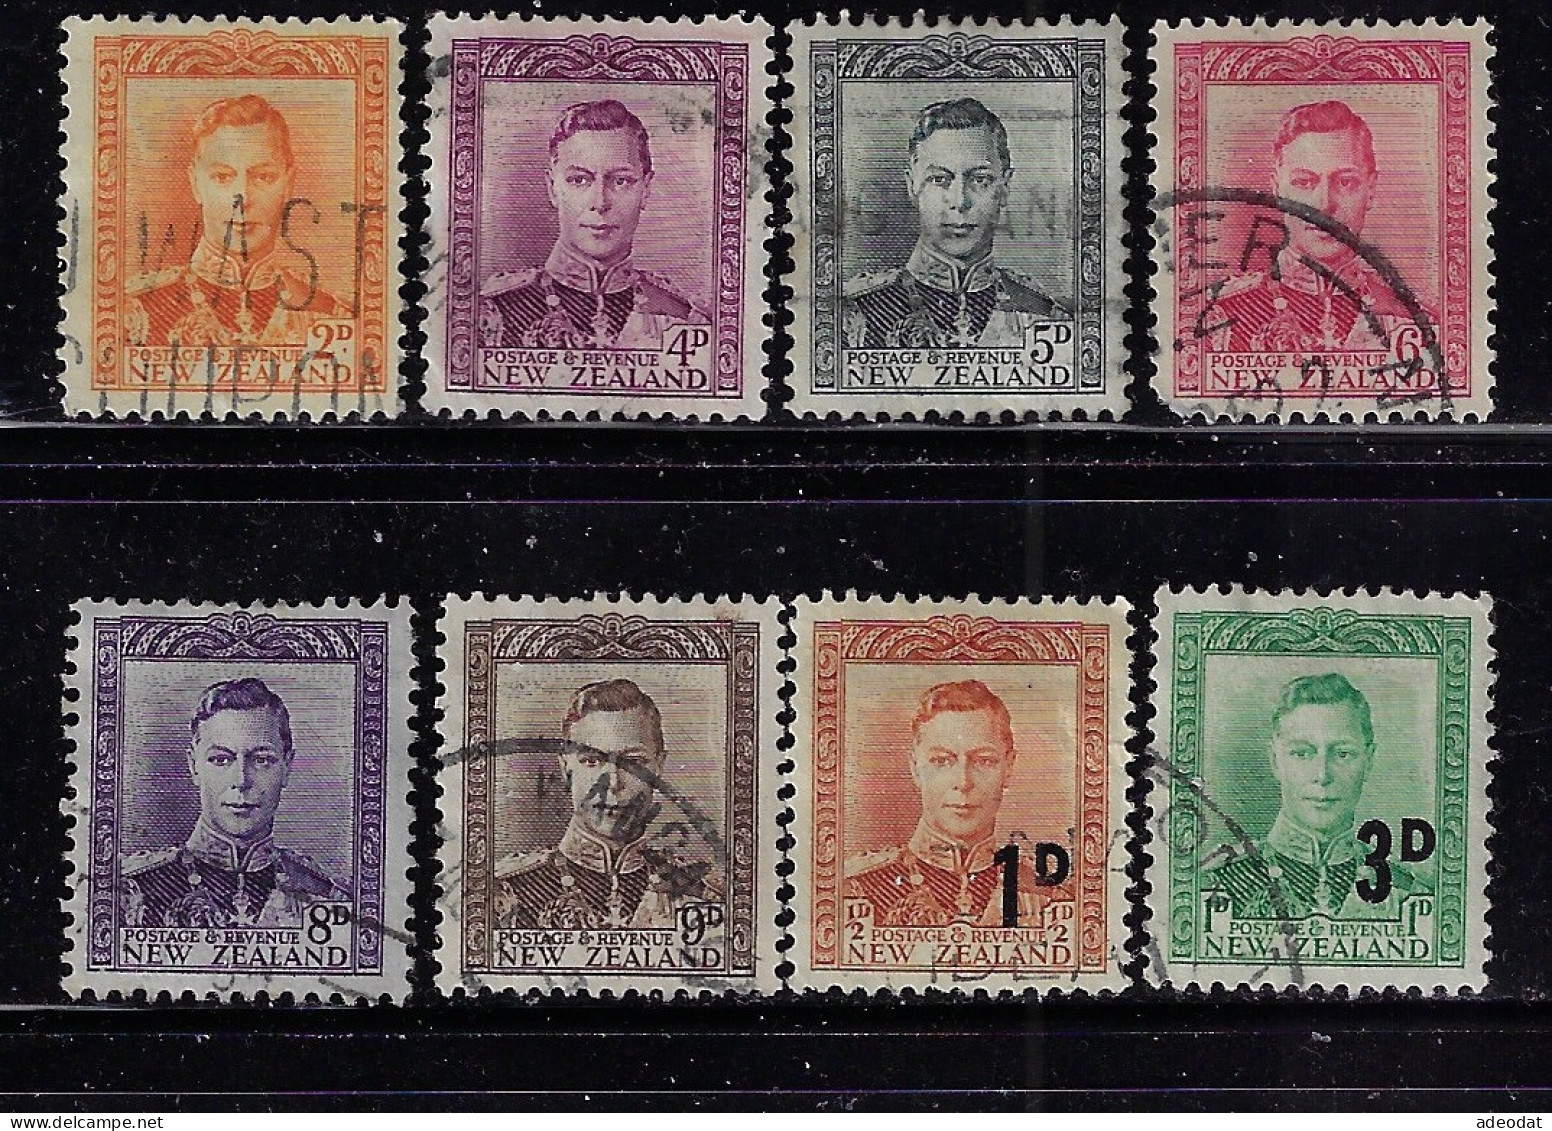 NEW ZEALAND 1947,1952,1953 GEORGE VI  SCOTT #258-264,279,285  USED - Used Stamps